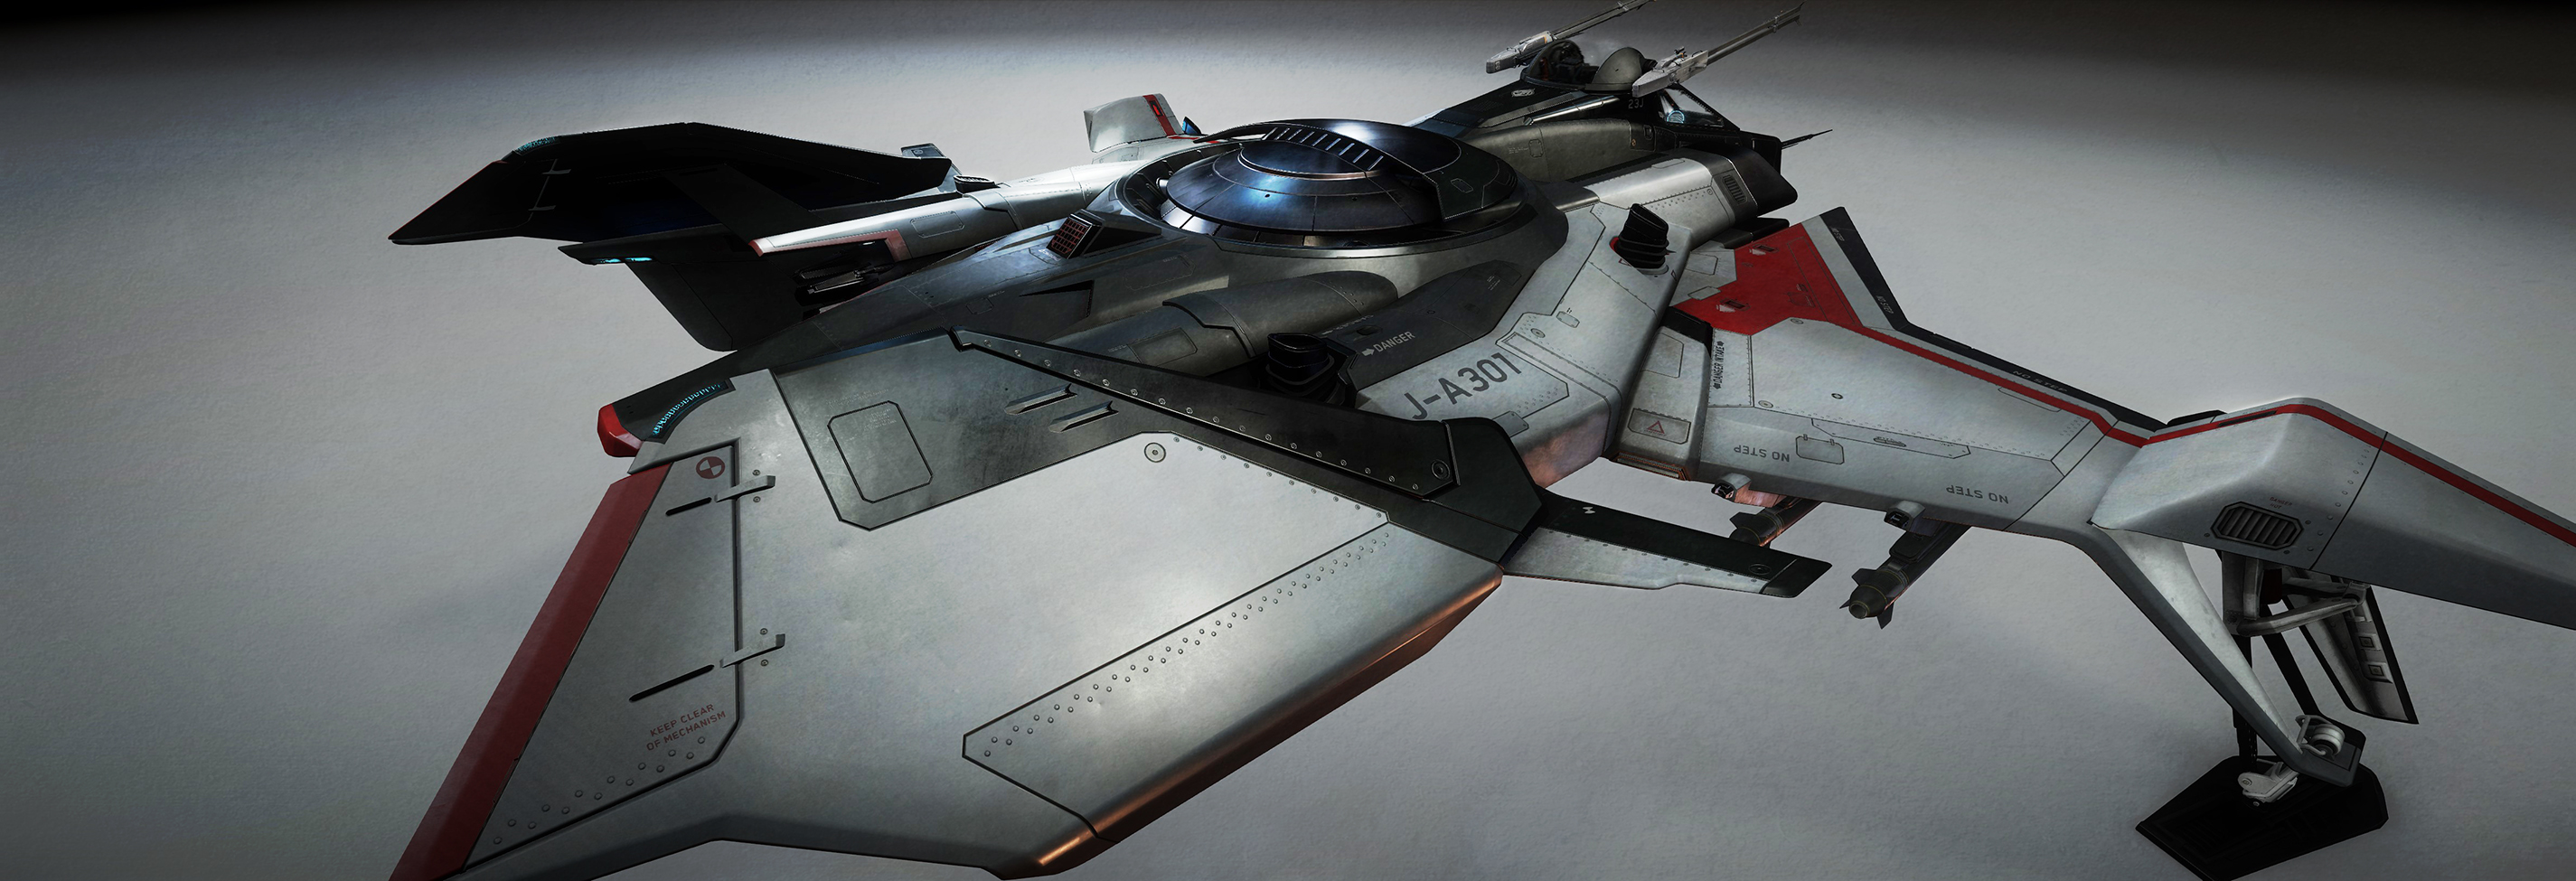 Datei:Anvil Aerospace Gladiator-WB BackRight.jpg